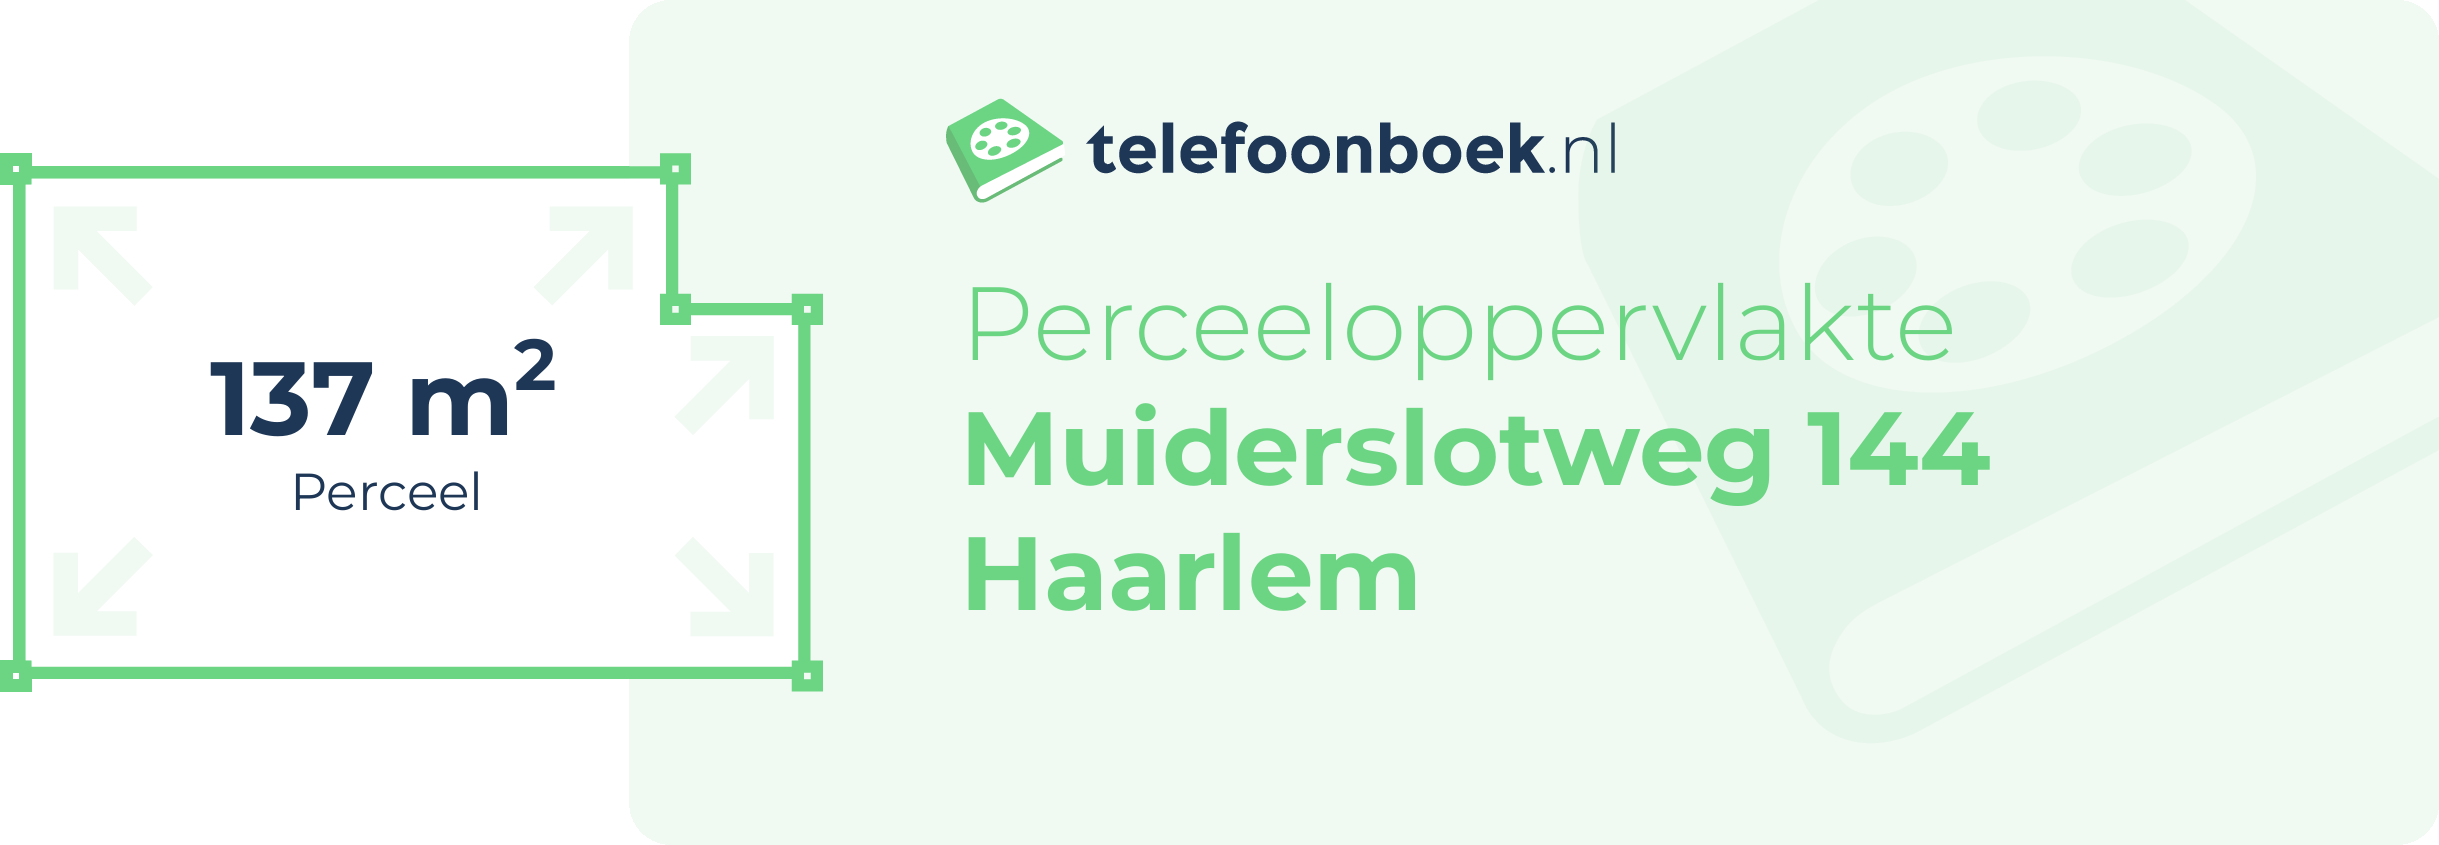 Perceeloppervlakte Muiderslotweg 144 Haarlem